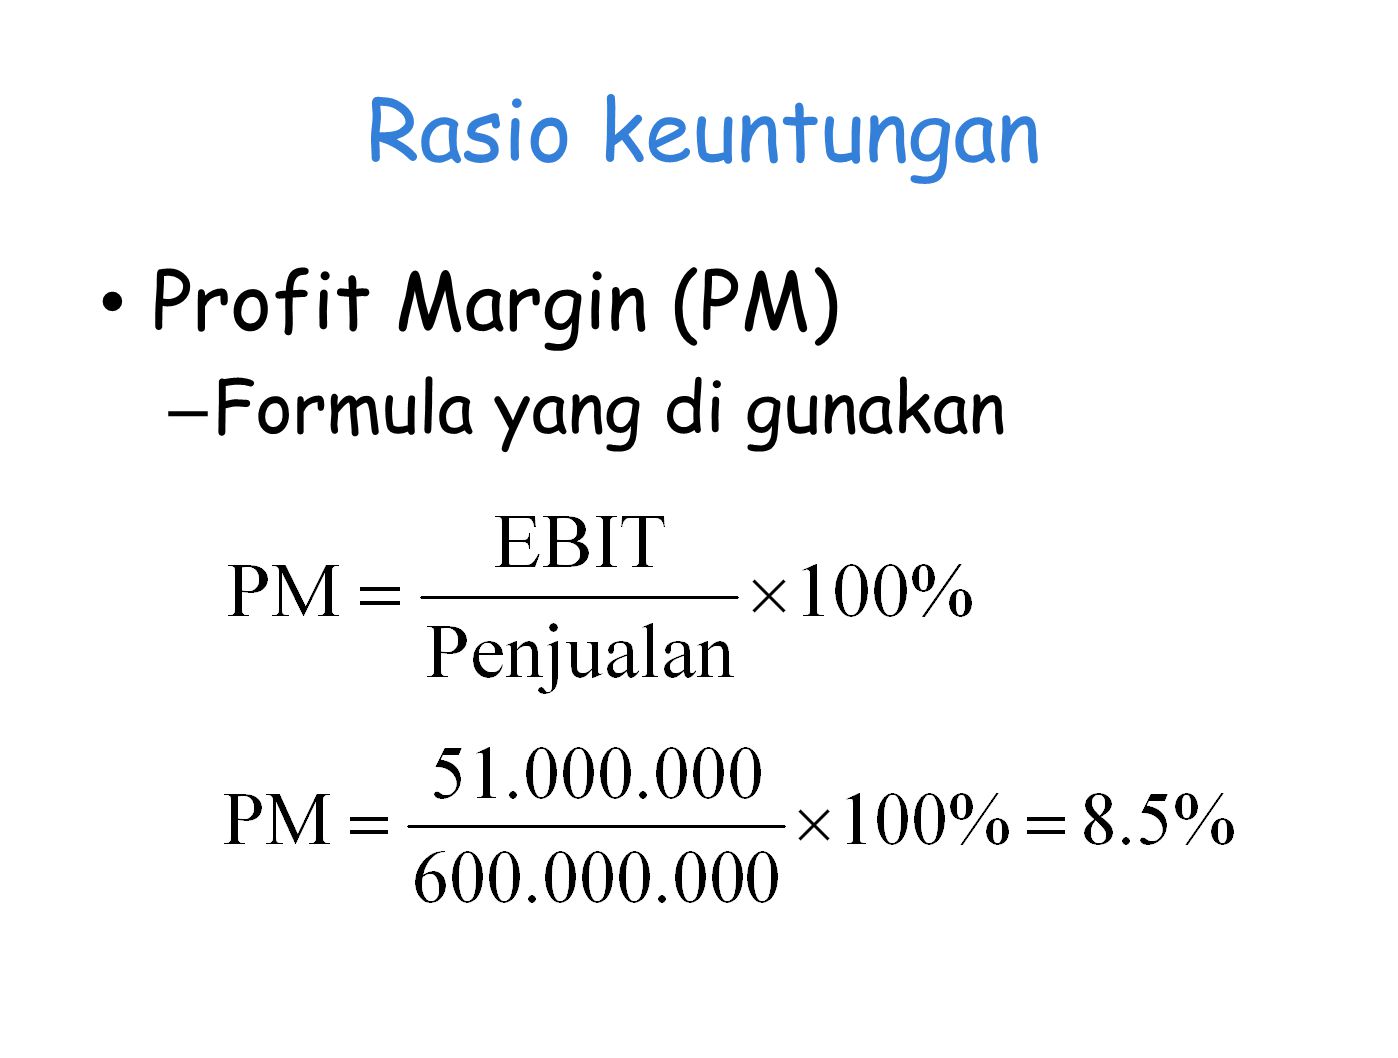 Rasio keuntungan Profit Margin (PM) Formula yang di gunakan